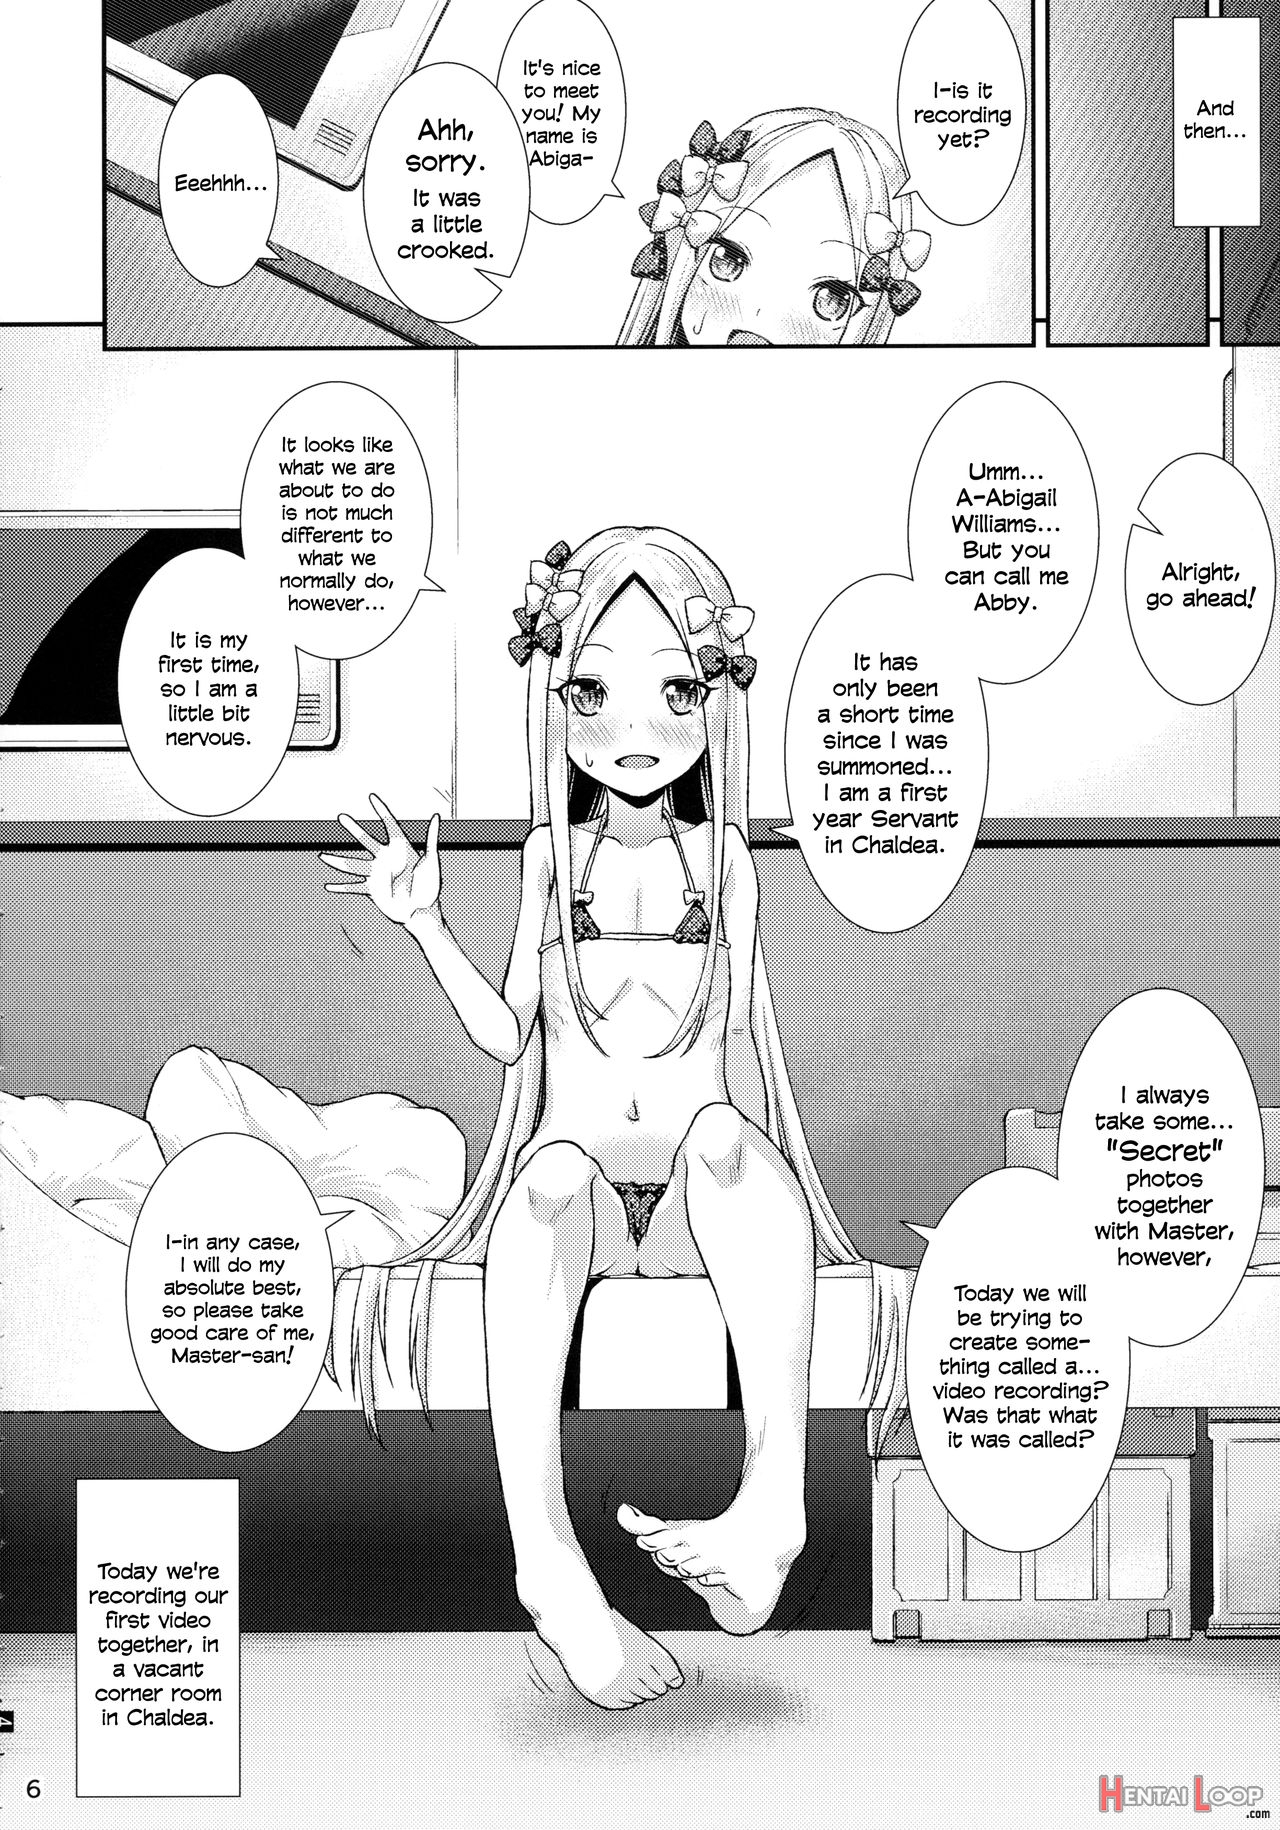 Page 3 of Abby And The Secret Homemade Sex Tape (by Yamazaki Kana)